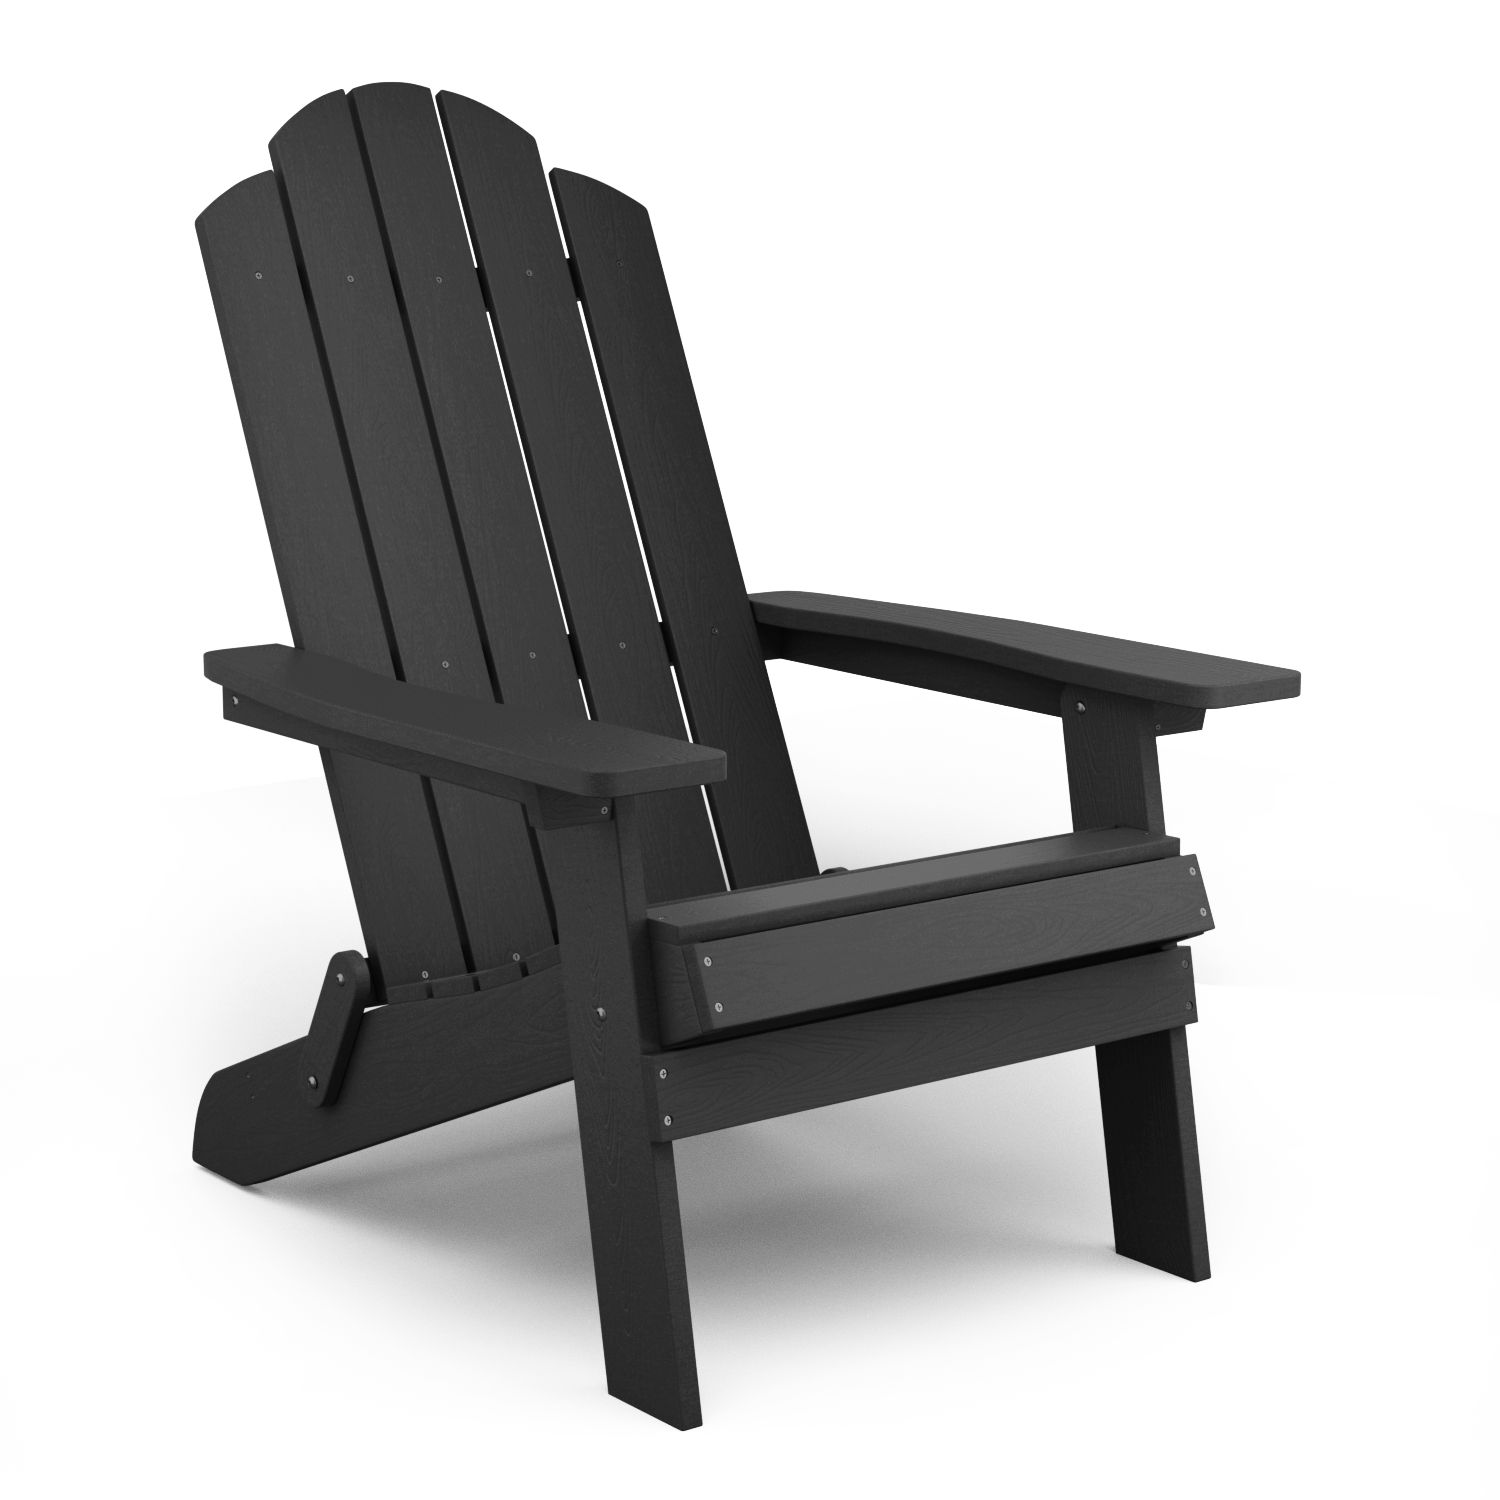 WINSOON Adirondack Chairs Folding Outdoor Patio Chairs, Black Finish | Walmart (US)